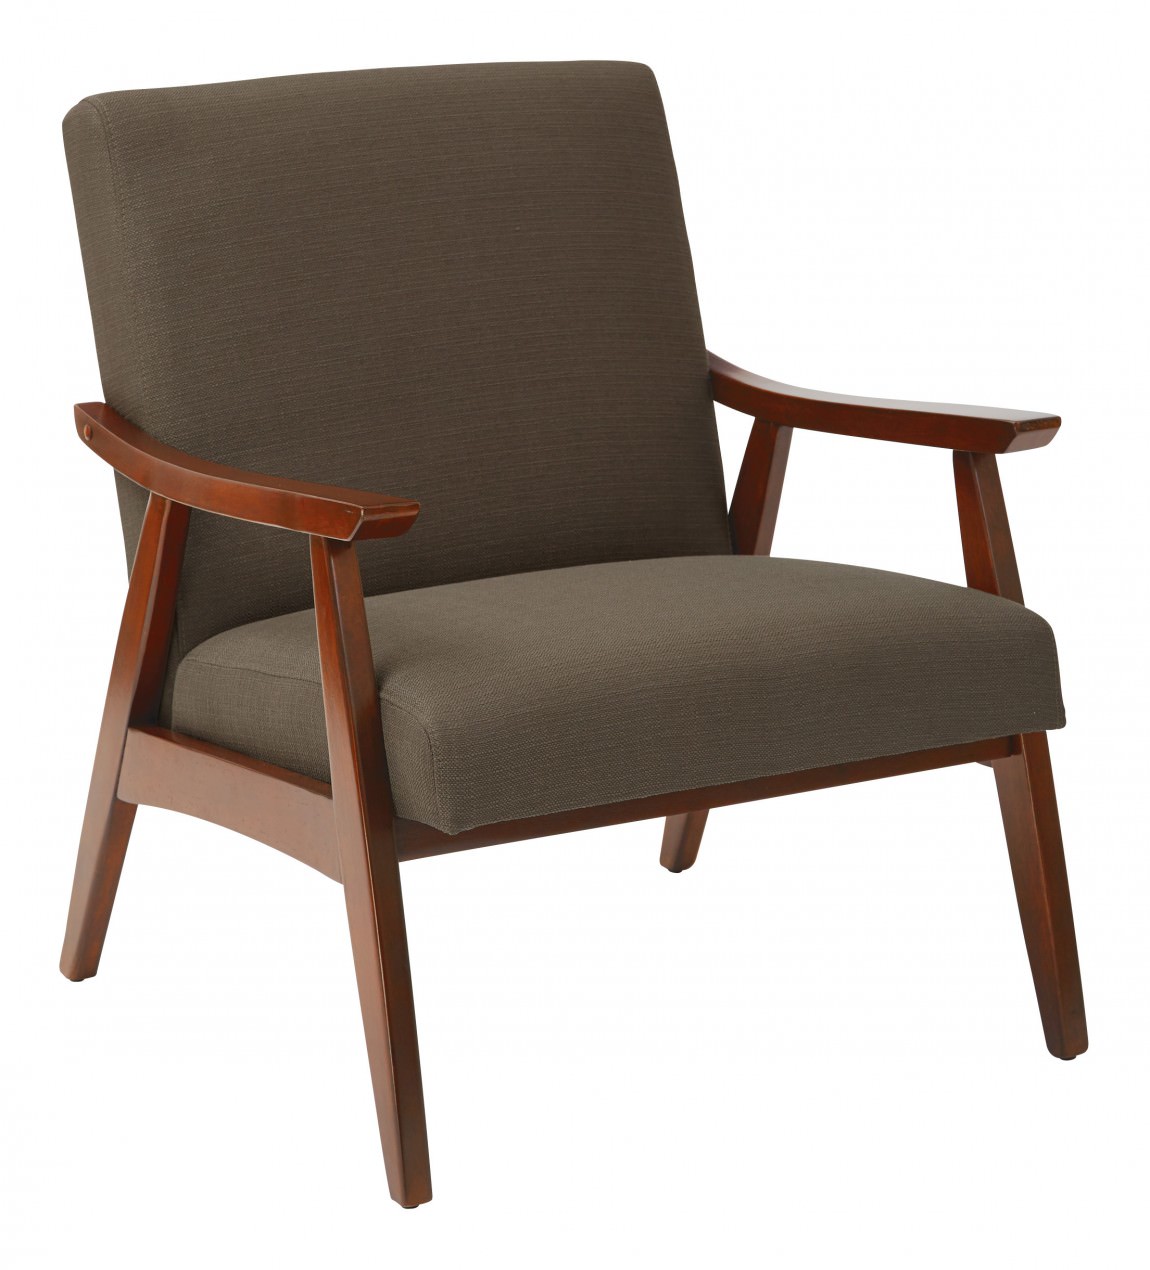 Davis Wooden Armchair